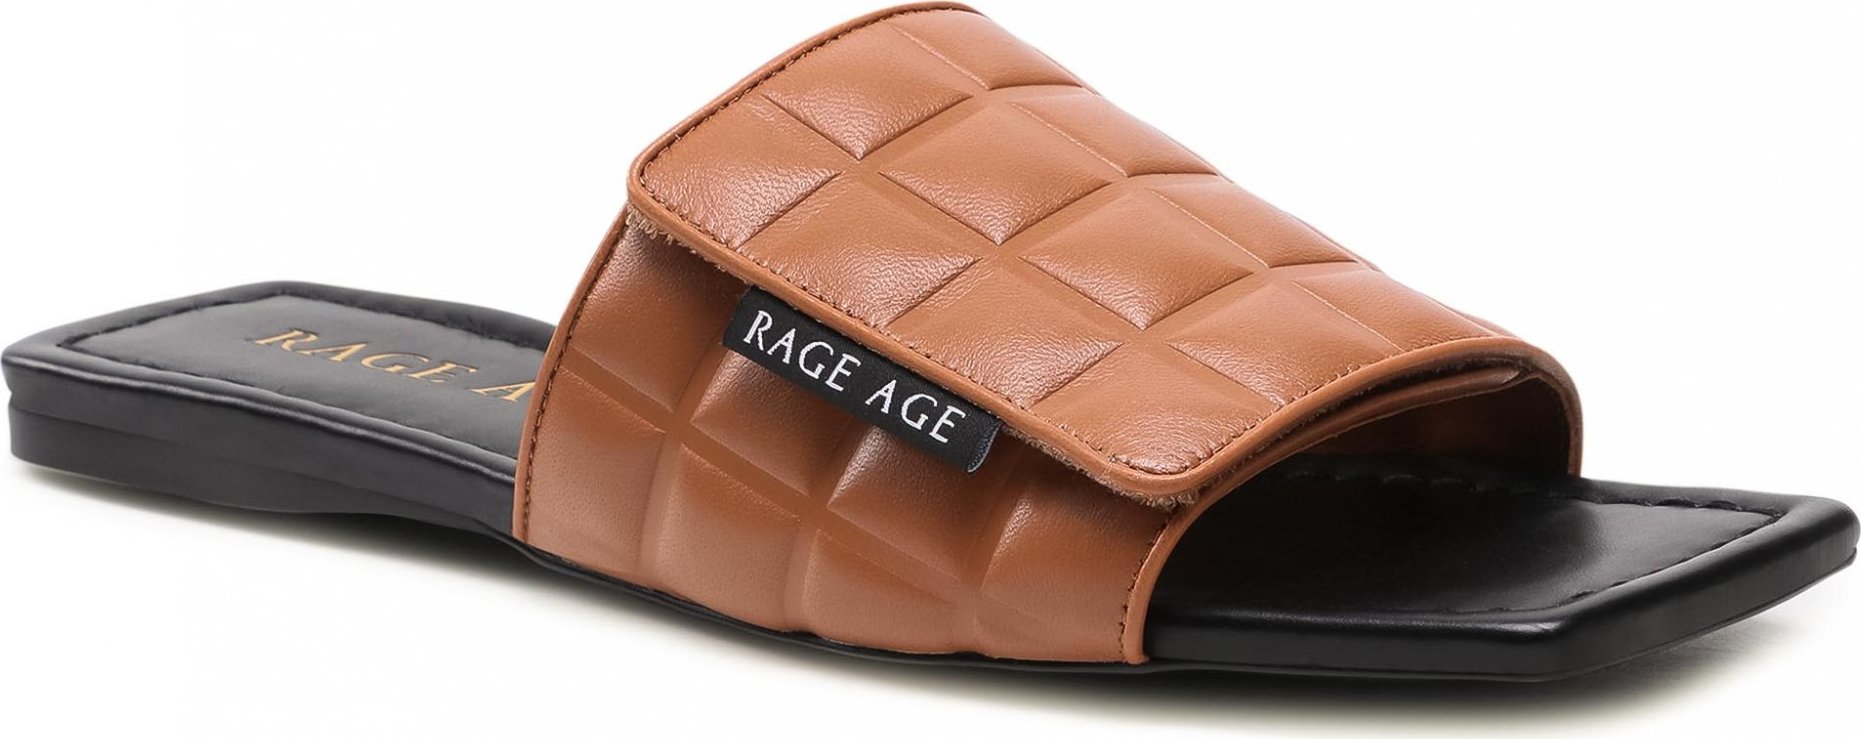 Rage Age RA-11-03-000116